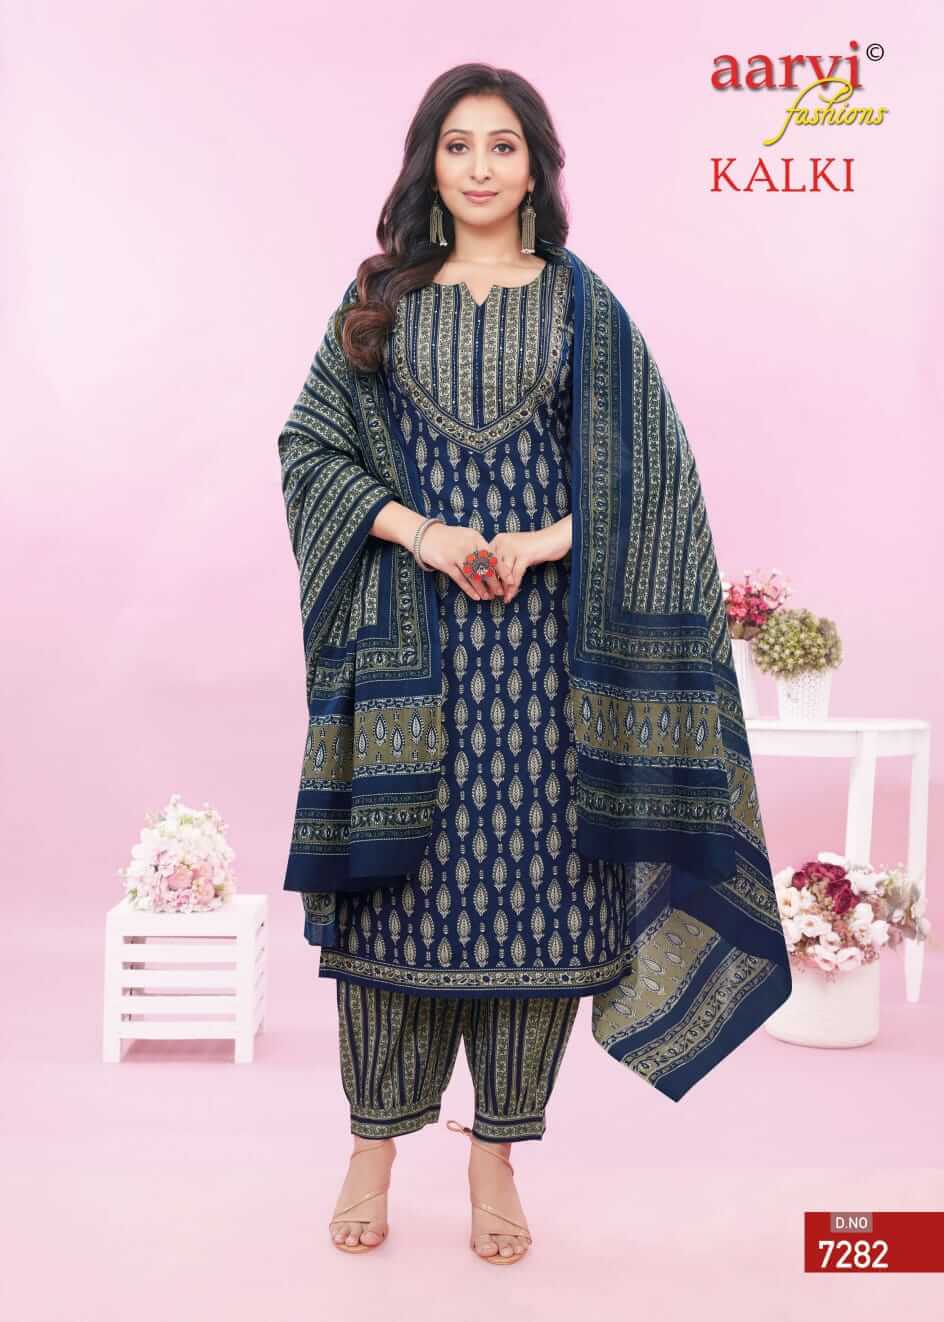 Aarvi Fashion Kalki vol 2 Cotton Salwar Kameez collection 8